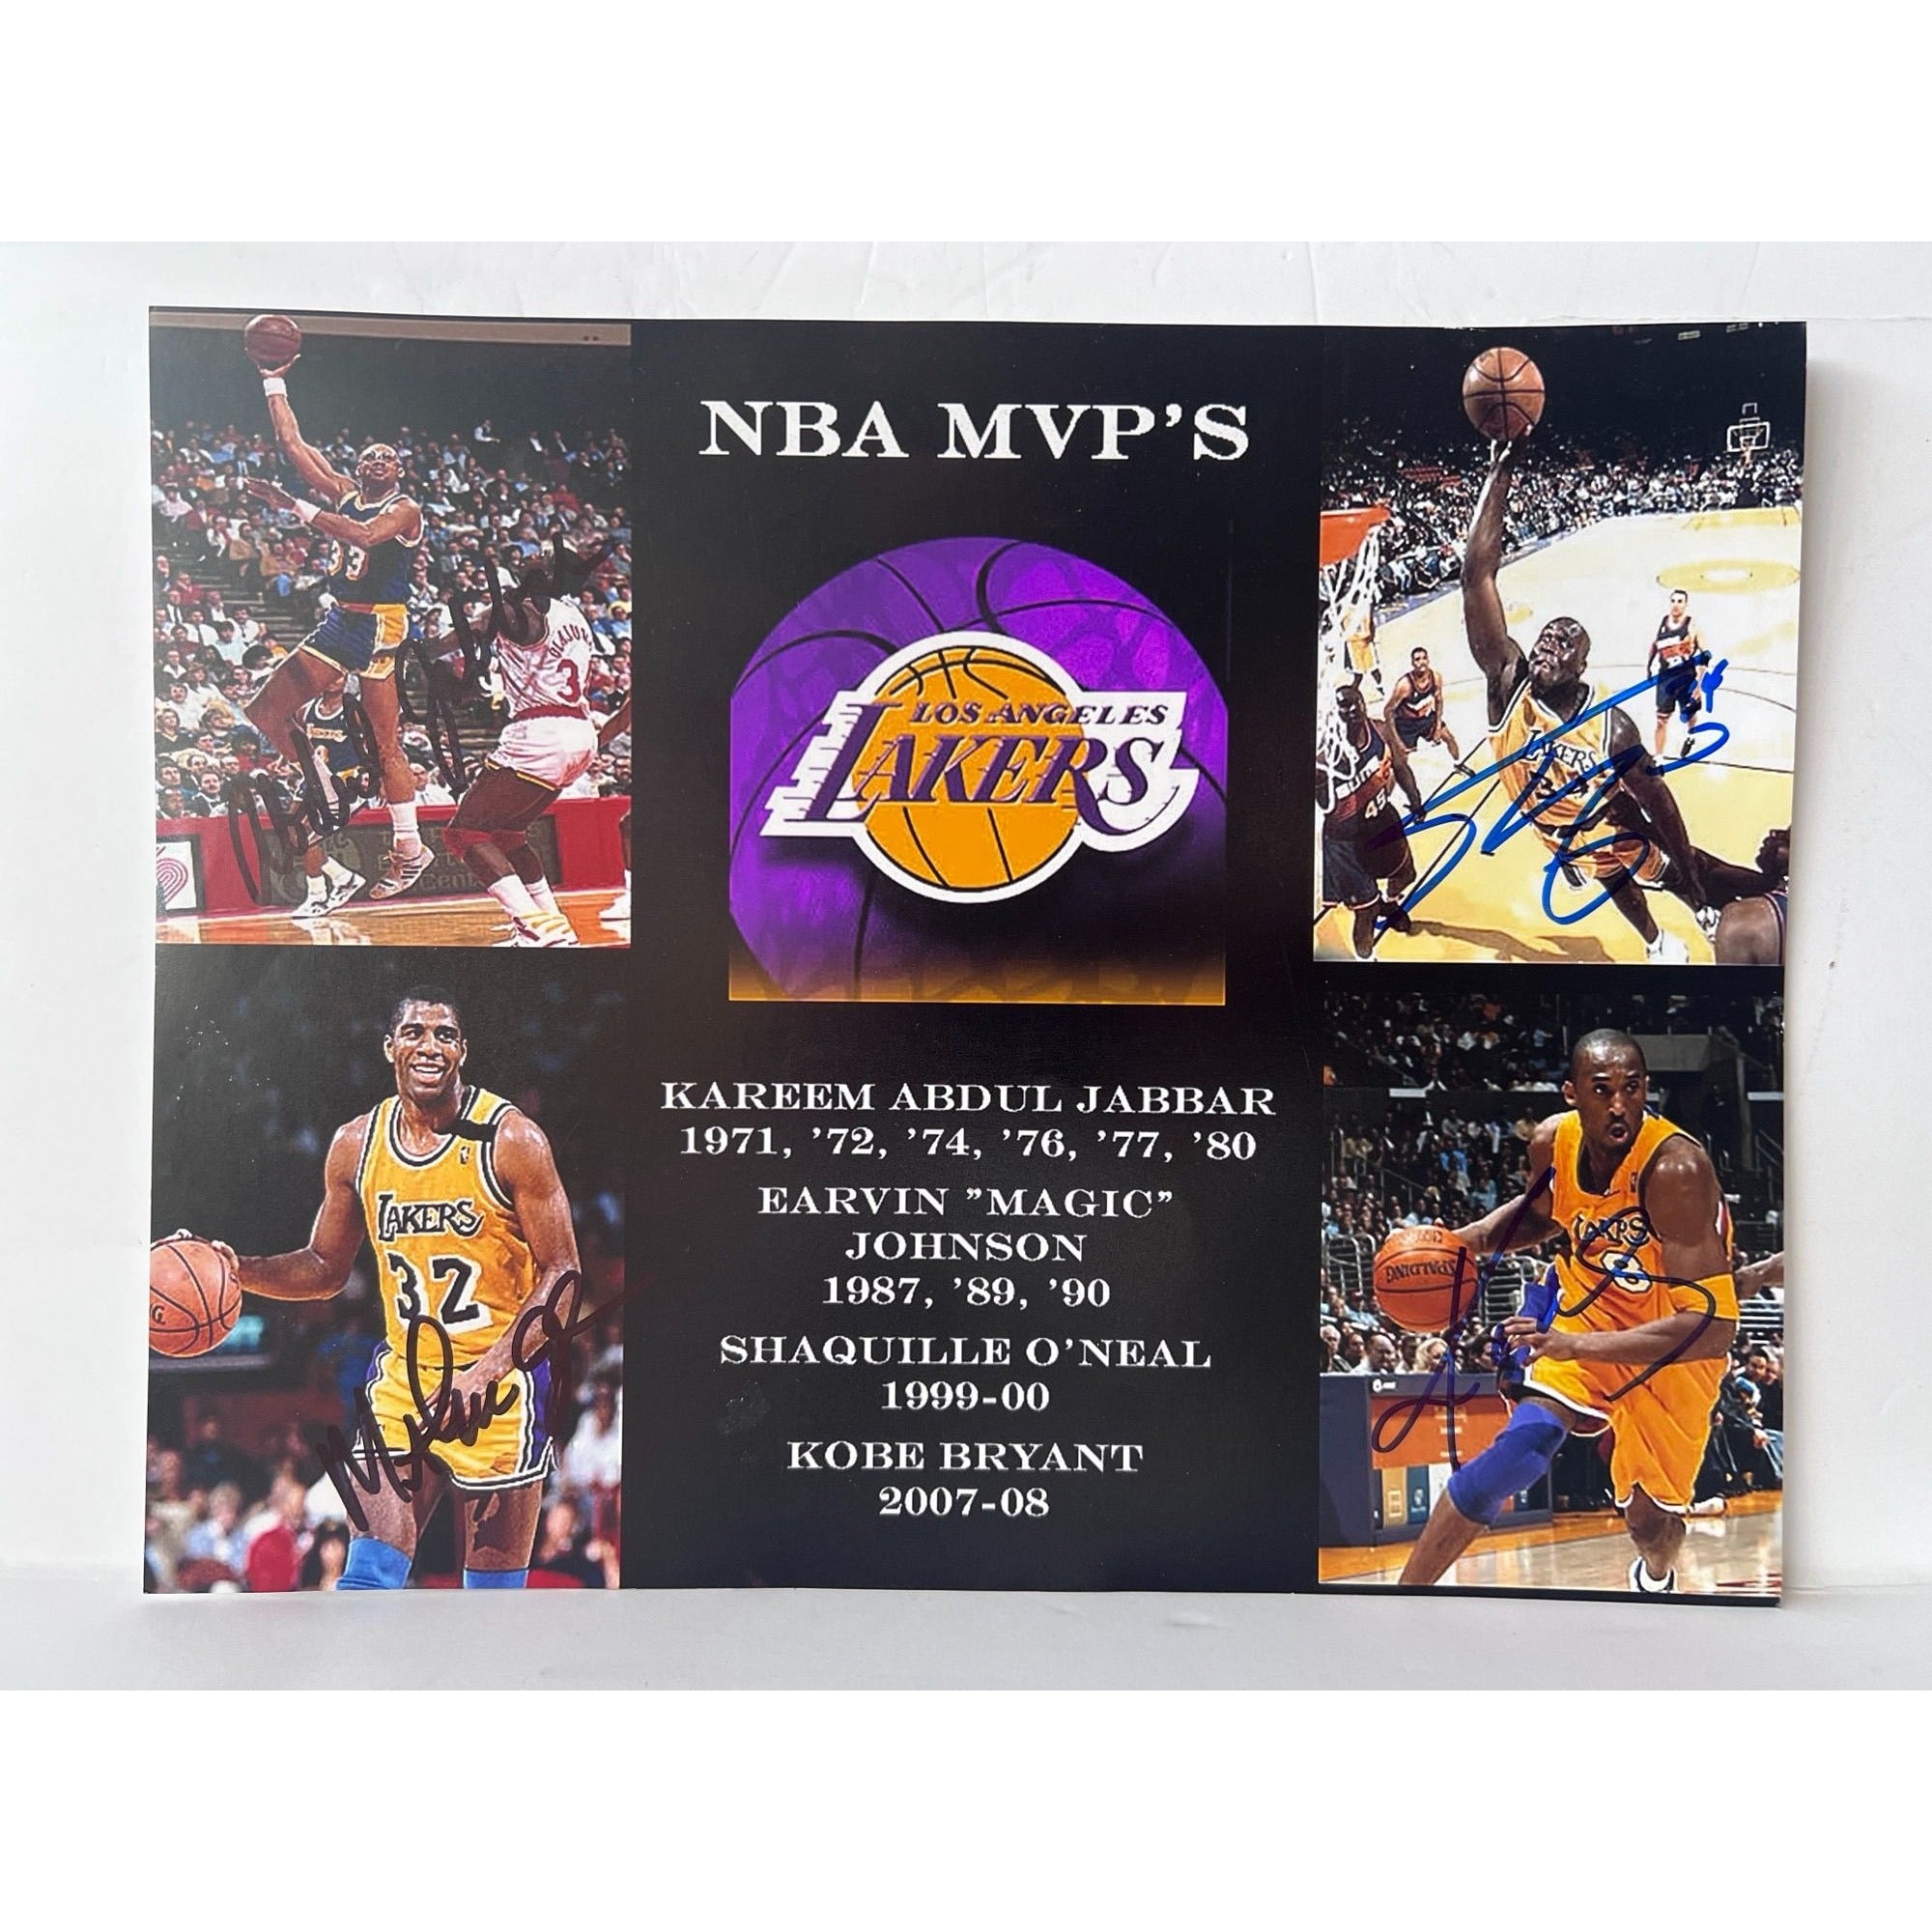 Los Angeles Lakers Kobe Bryant Shaquille O'Neal Magic Johnson Kareem Abdul-Jabbar 11 x 14 photo signed with proof